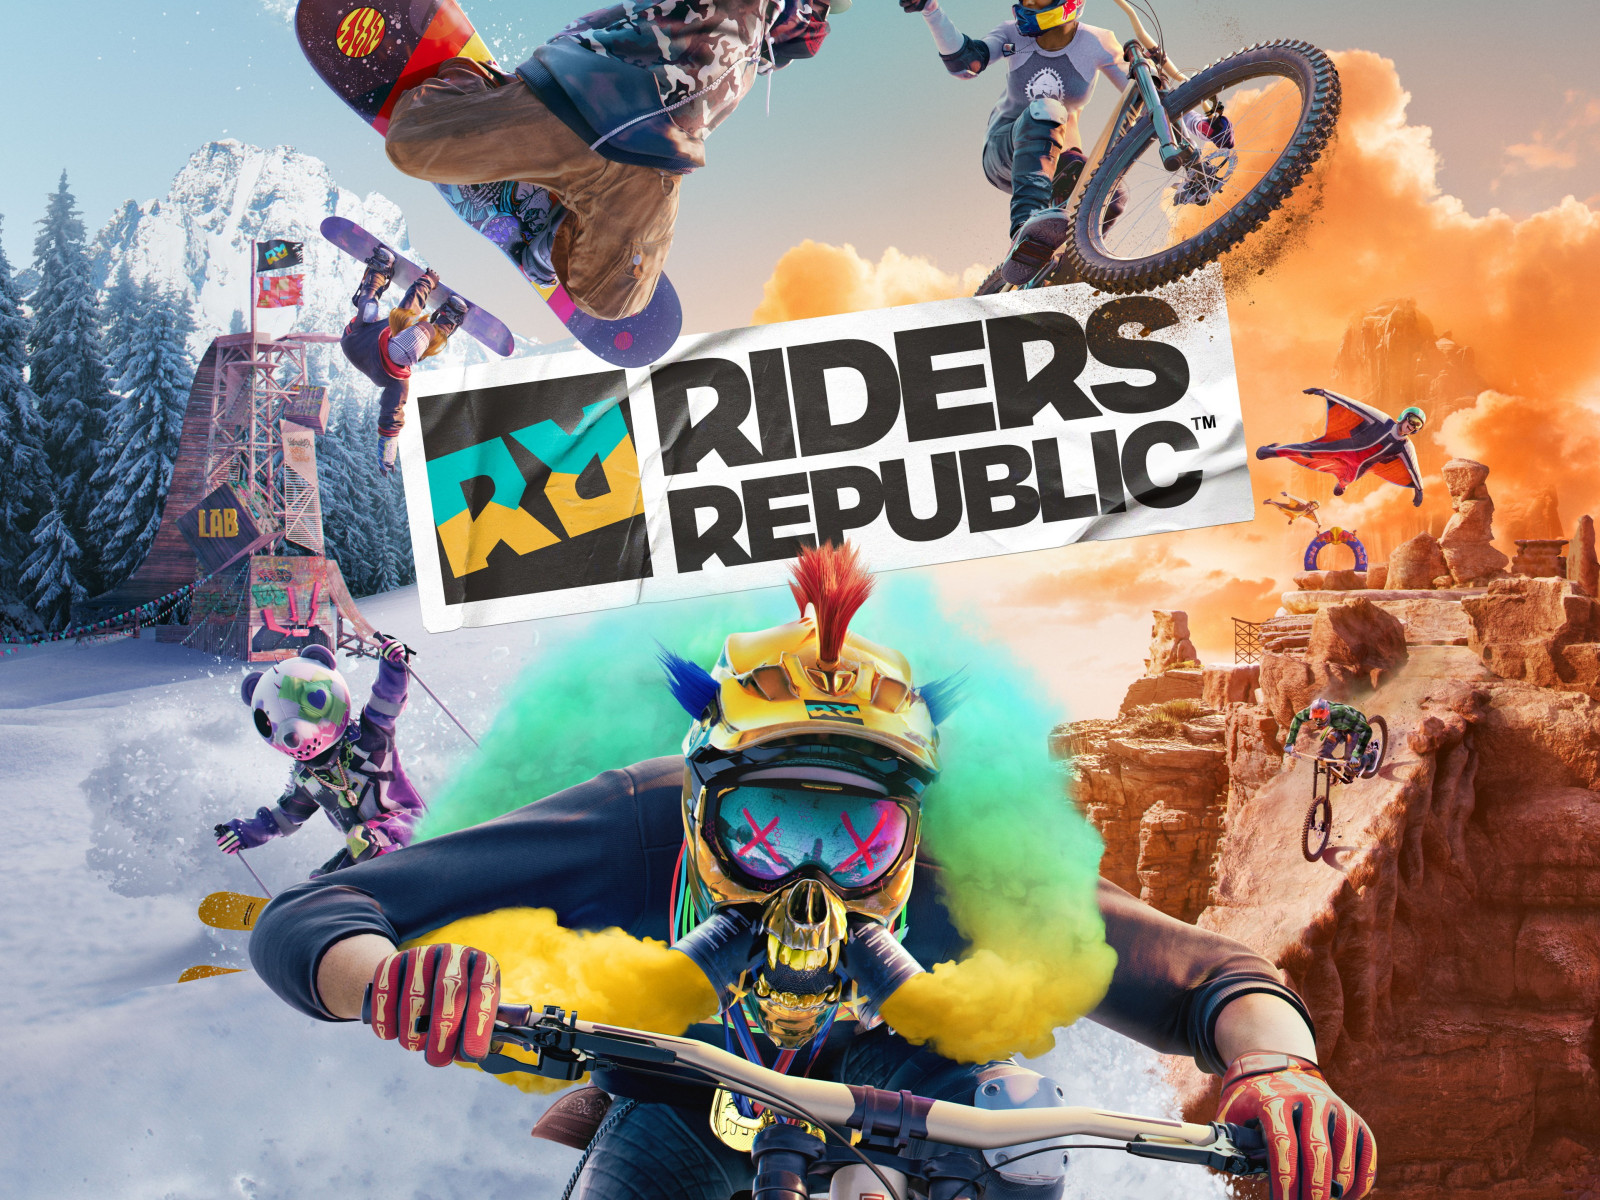 Download wallpaper: Riders Republic poster 1600x1200